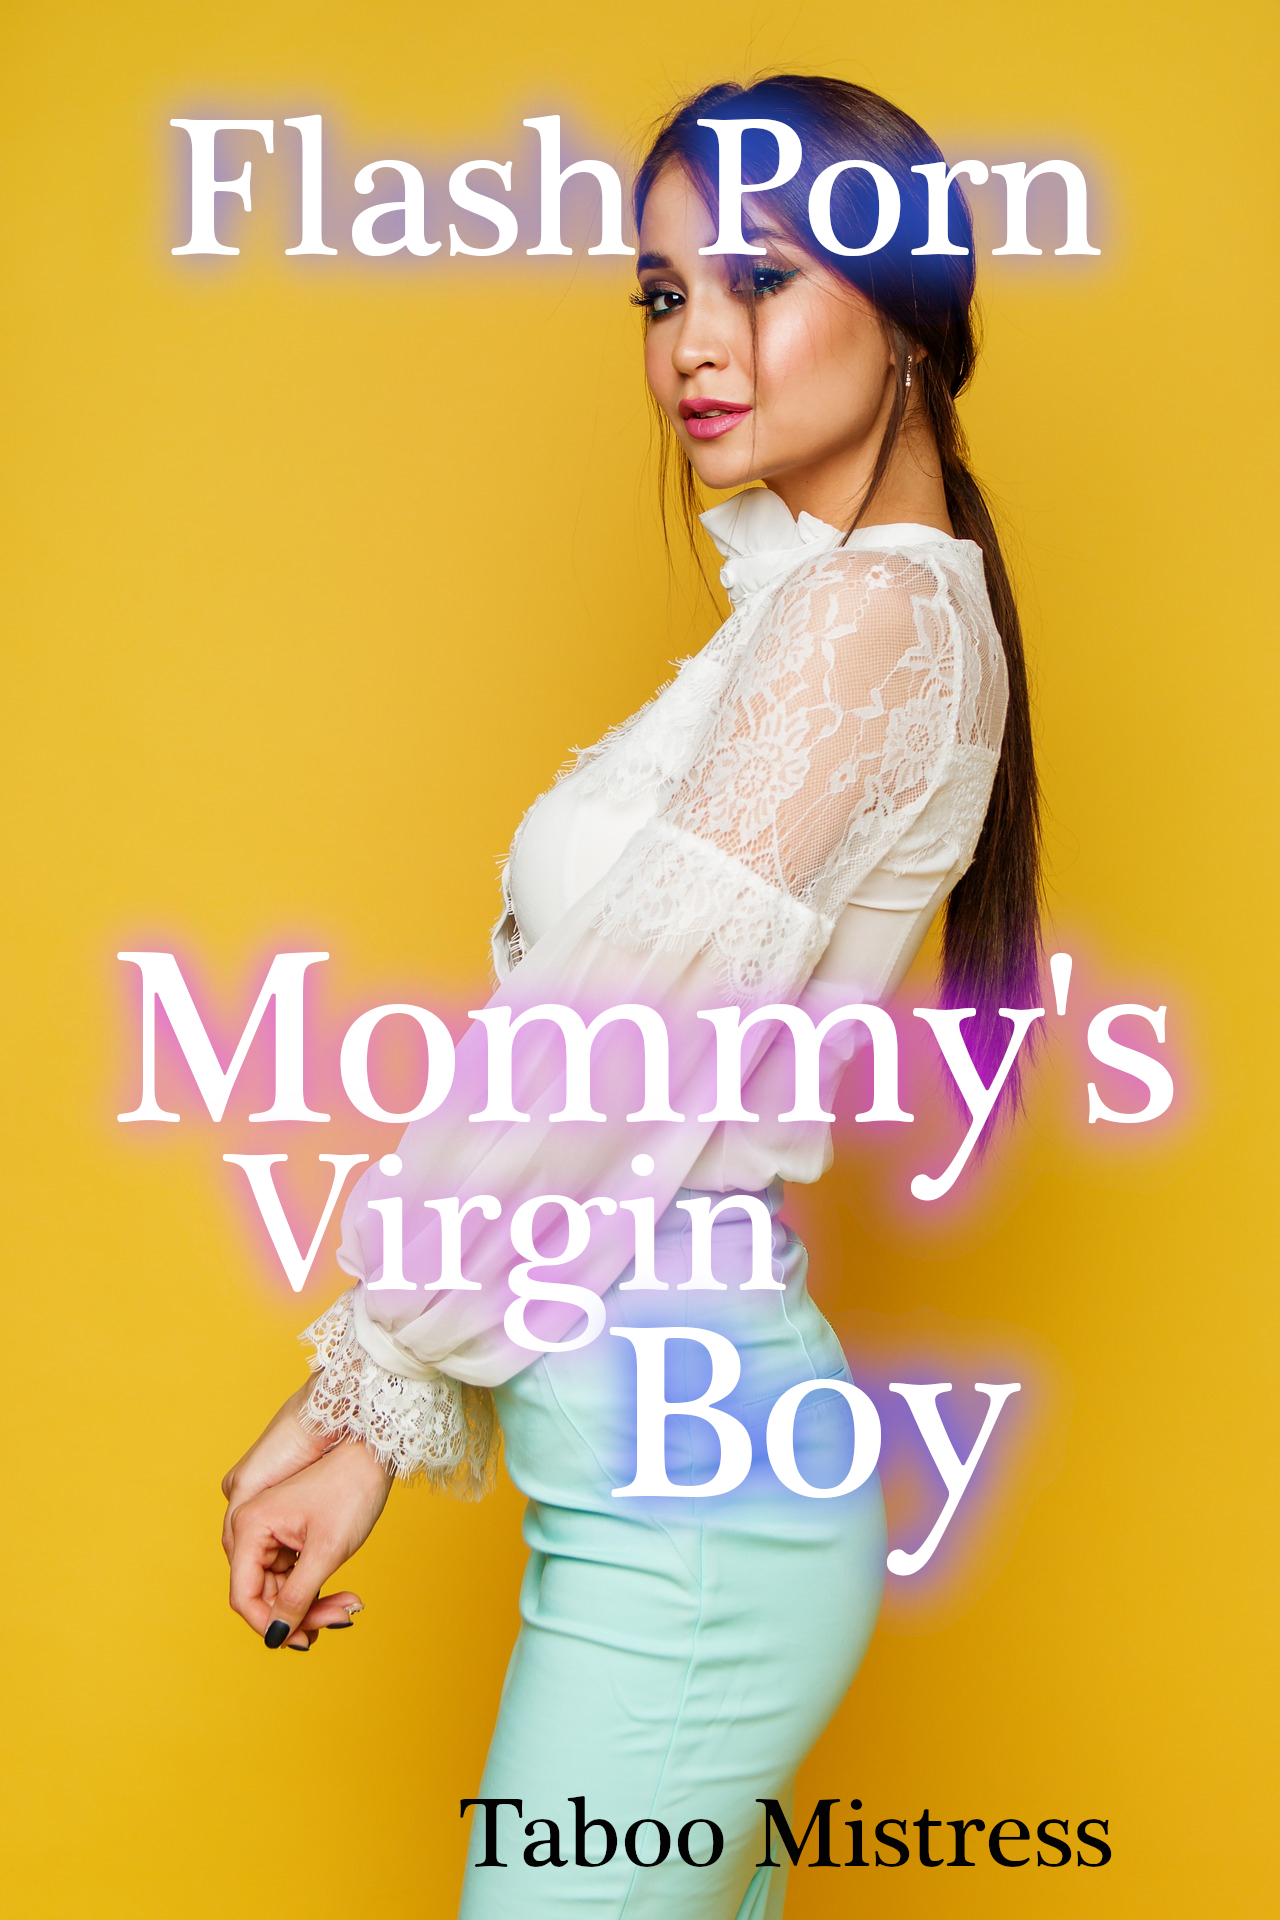 Virgin Taboo Porn - Flash Porn: Mommy's Virgin Boy, an Ebook by Taboo Mistress